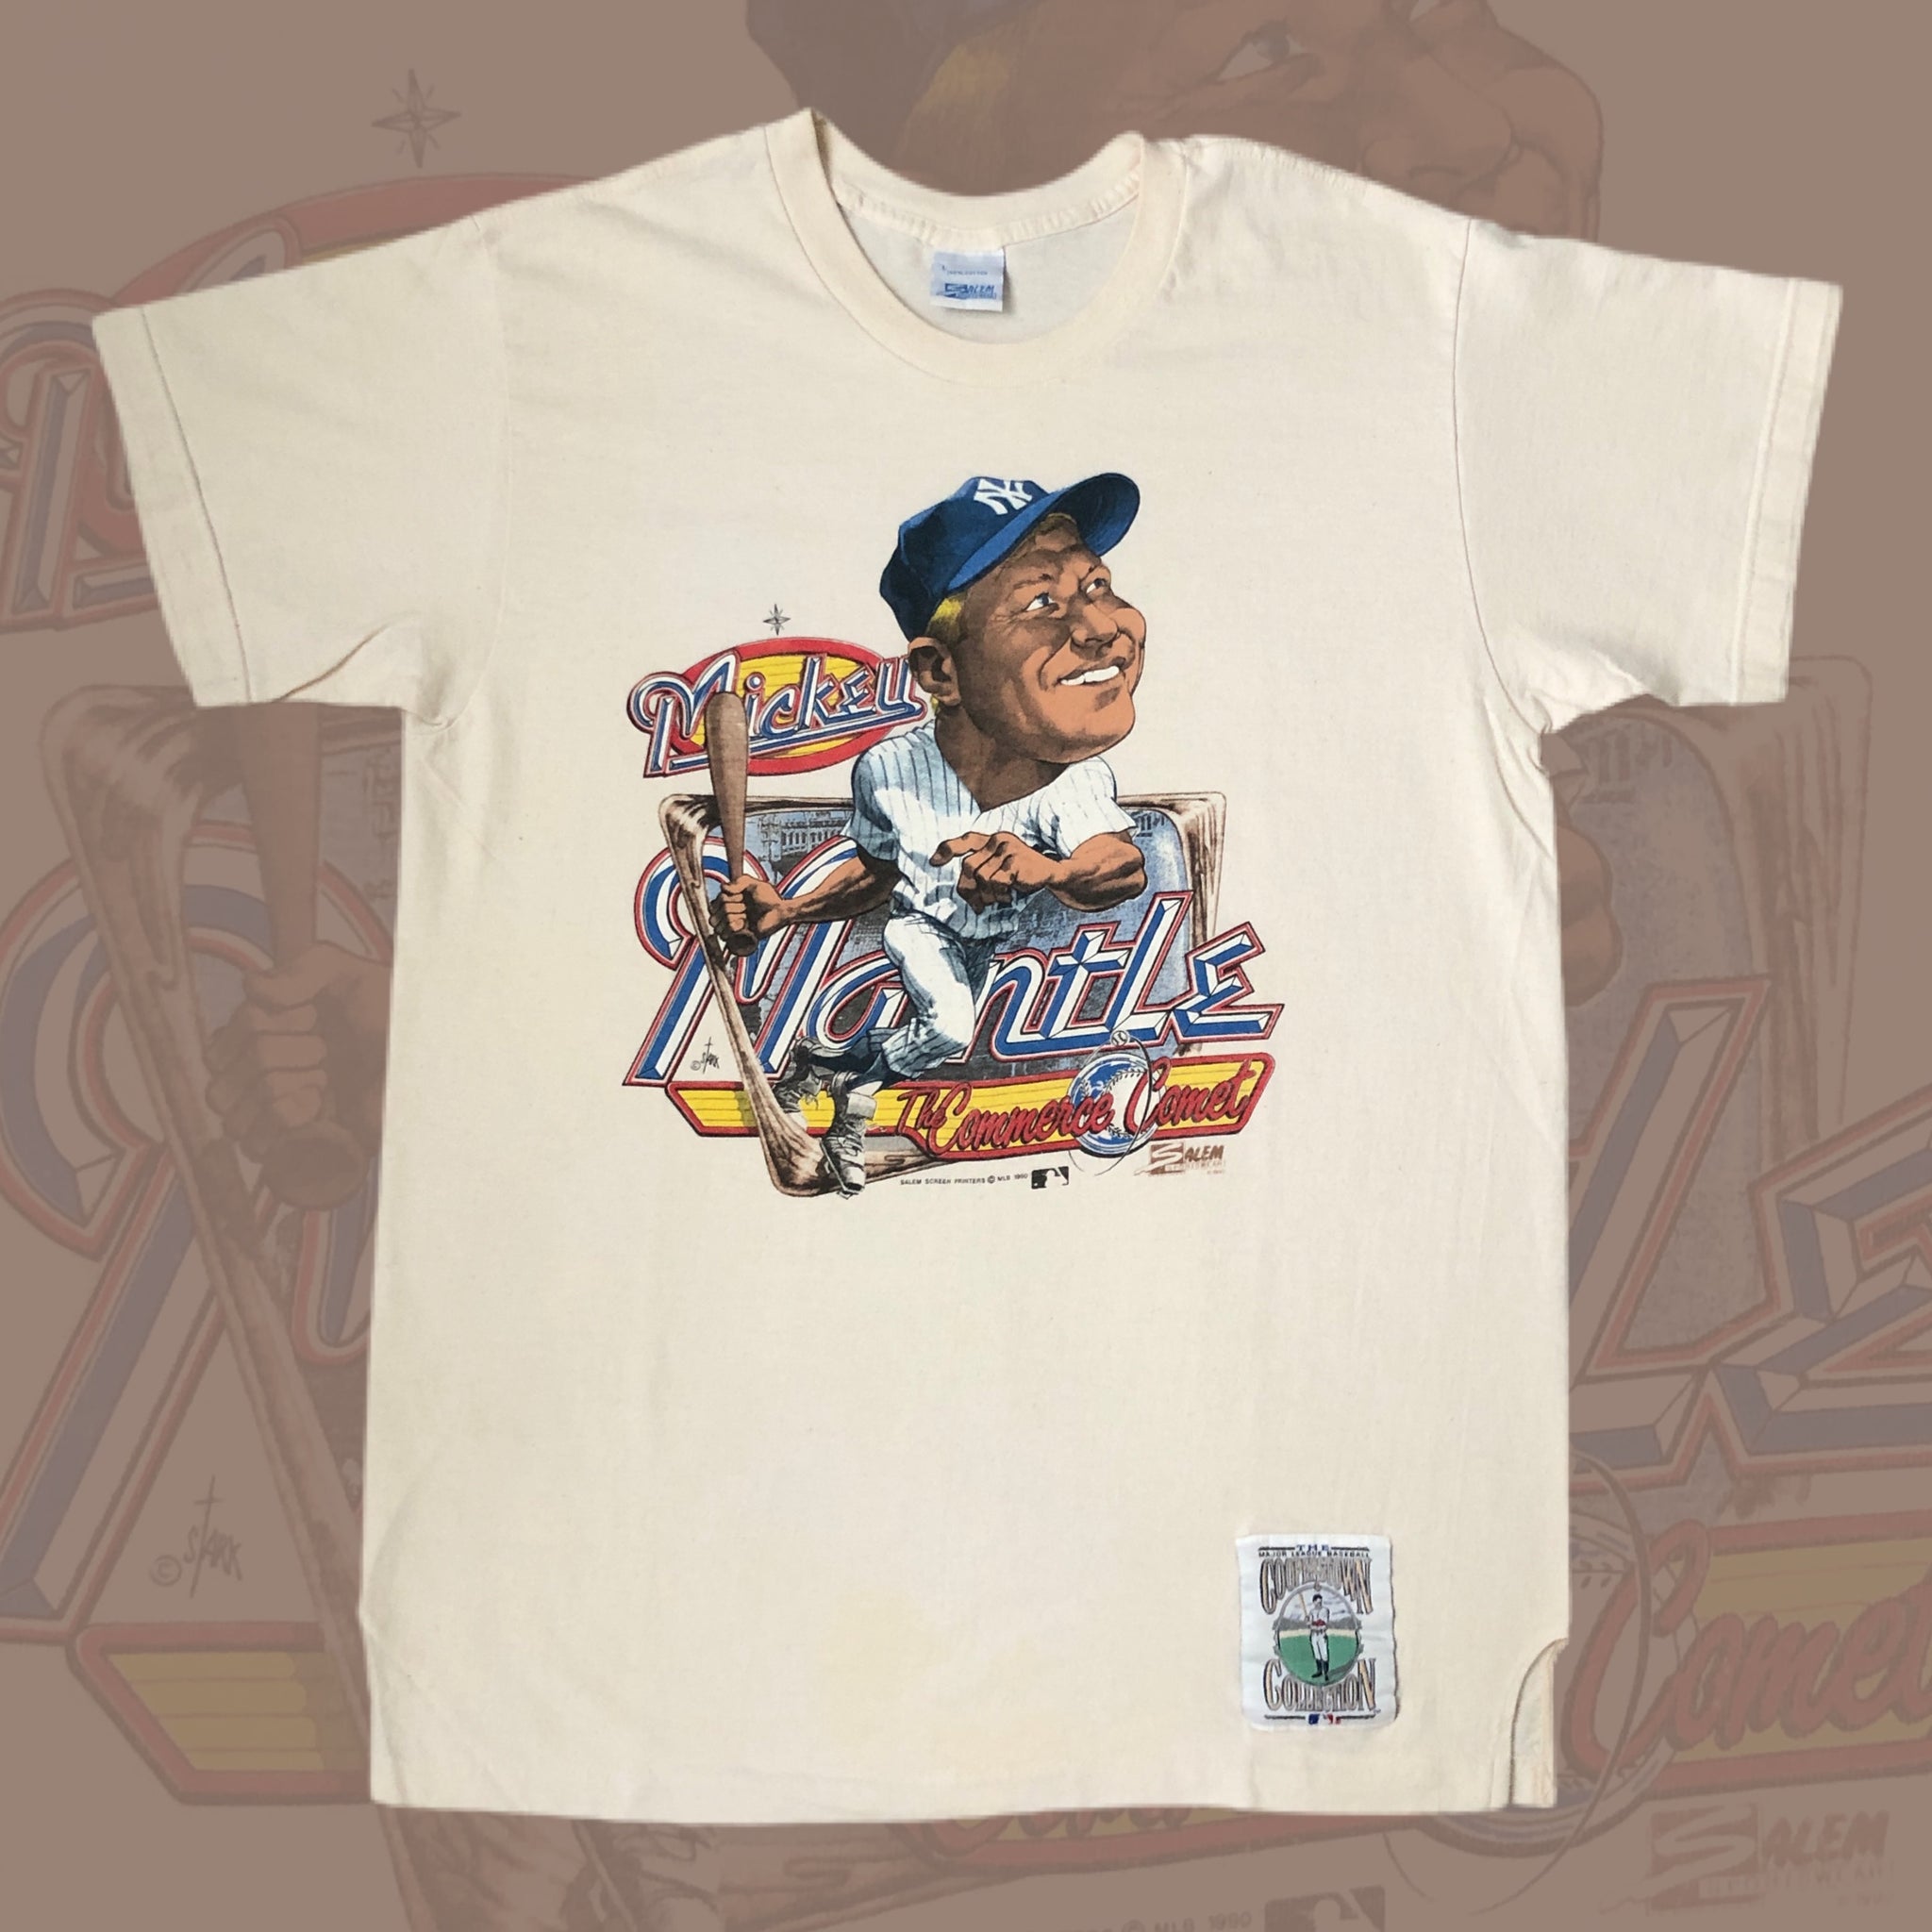 Vintage 1990 Mickey Mantle "The Commerce Comet" Salem Sportswear Caricature T-Shirt (L)